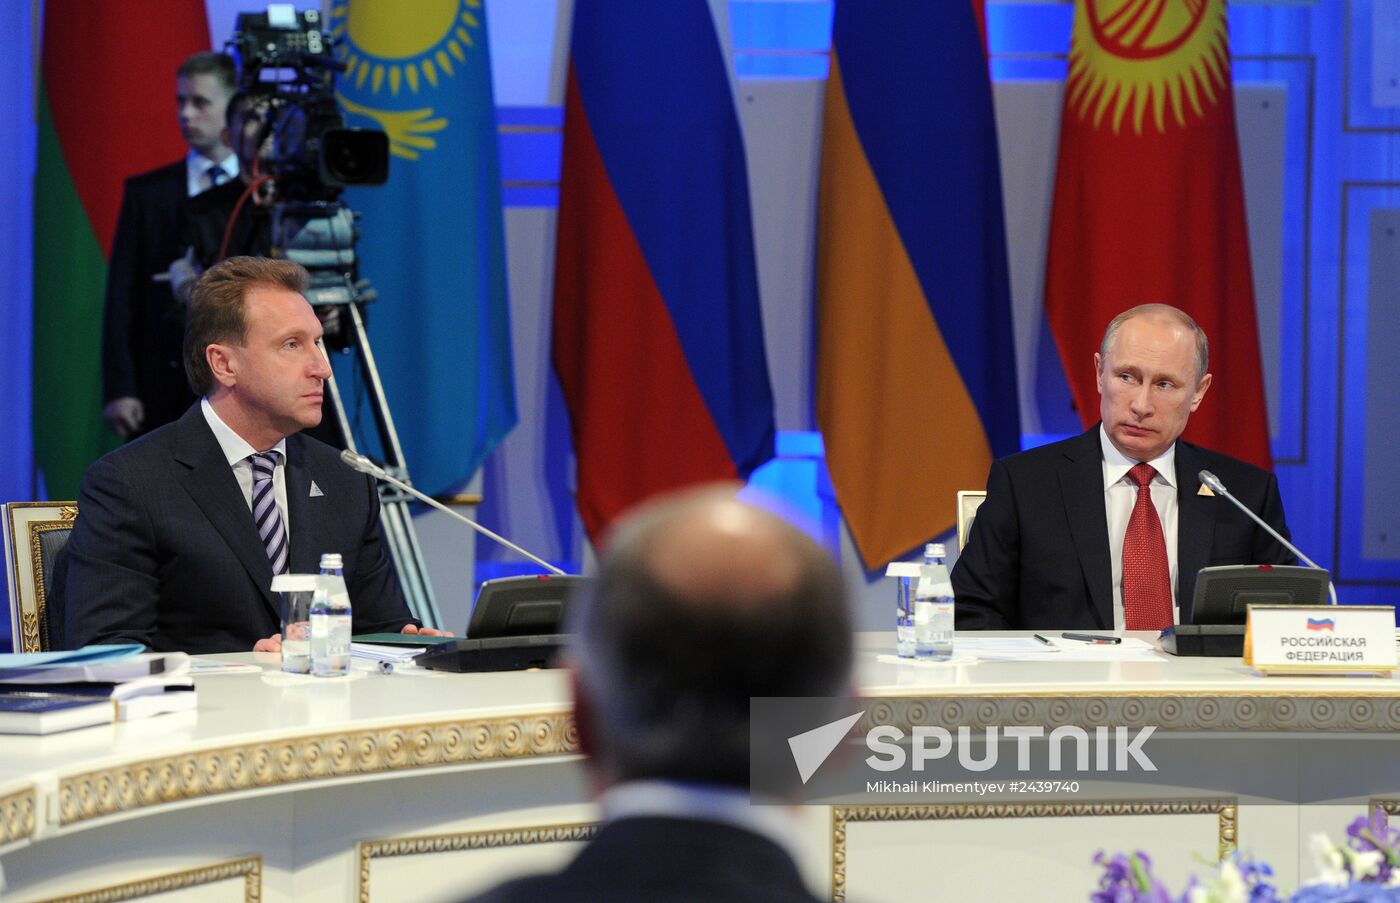 Vladimir Putin visits Kazakhstan, attends Supreme Eurasian Economic Council meeting